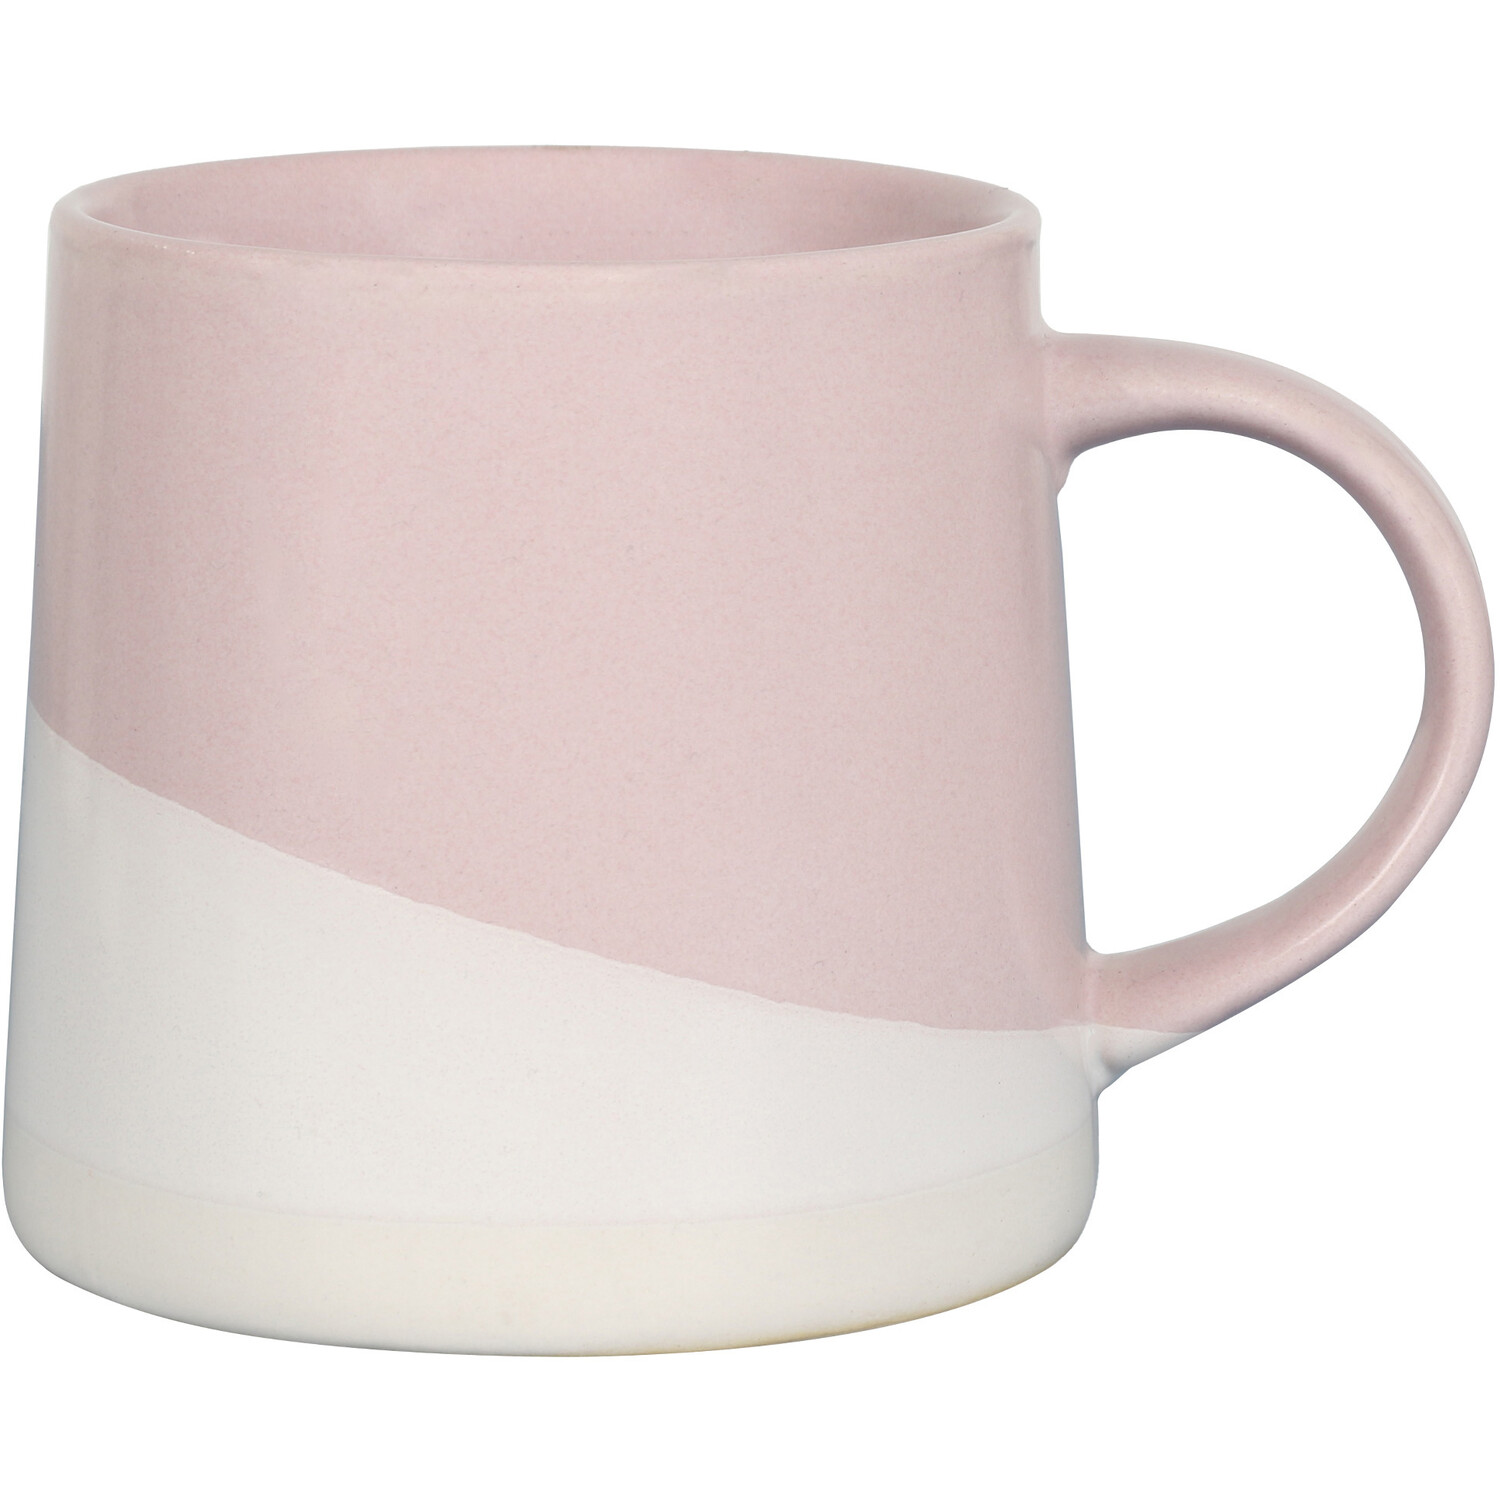 Two-Tone Stoneware Mug - Pink Image 1